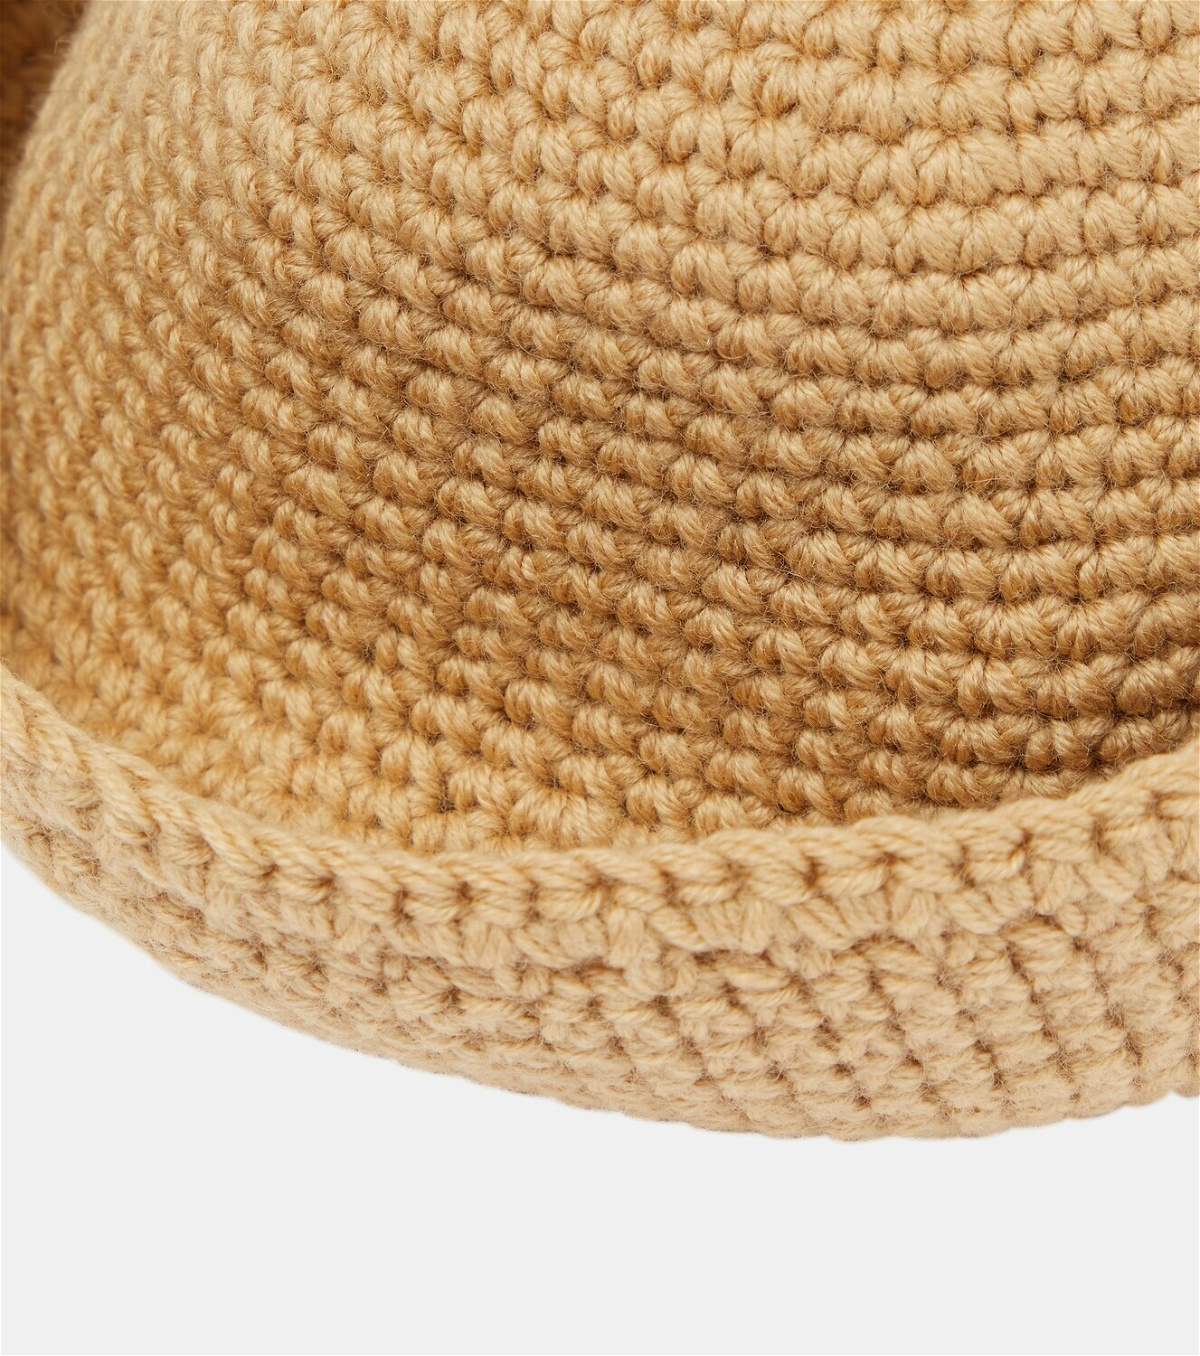 Ruslan Baginskiy Crochet wool bucket hat